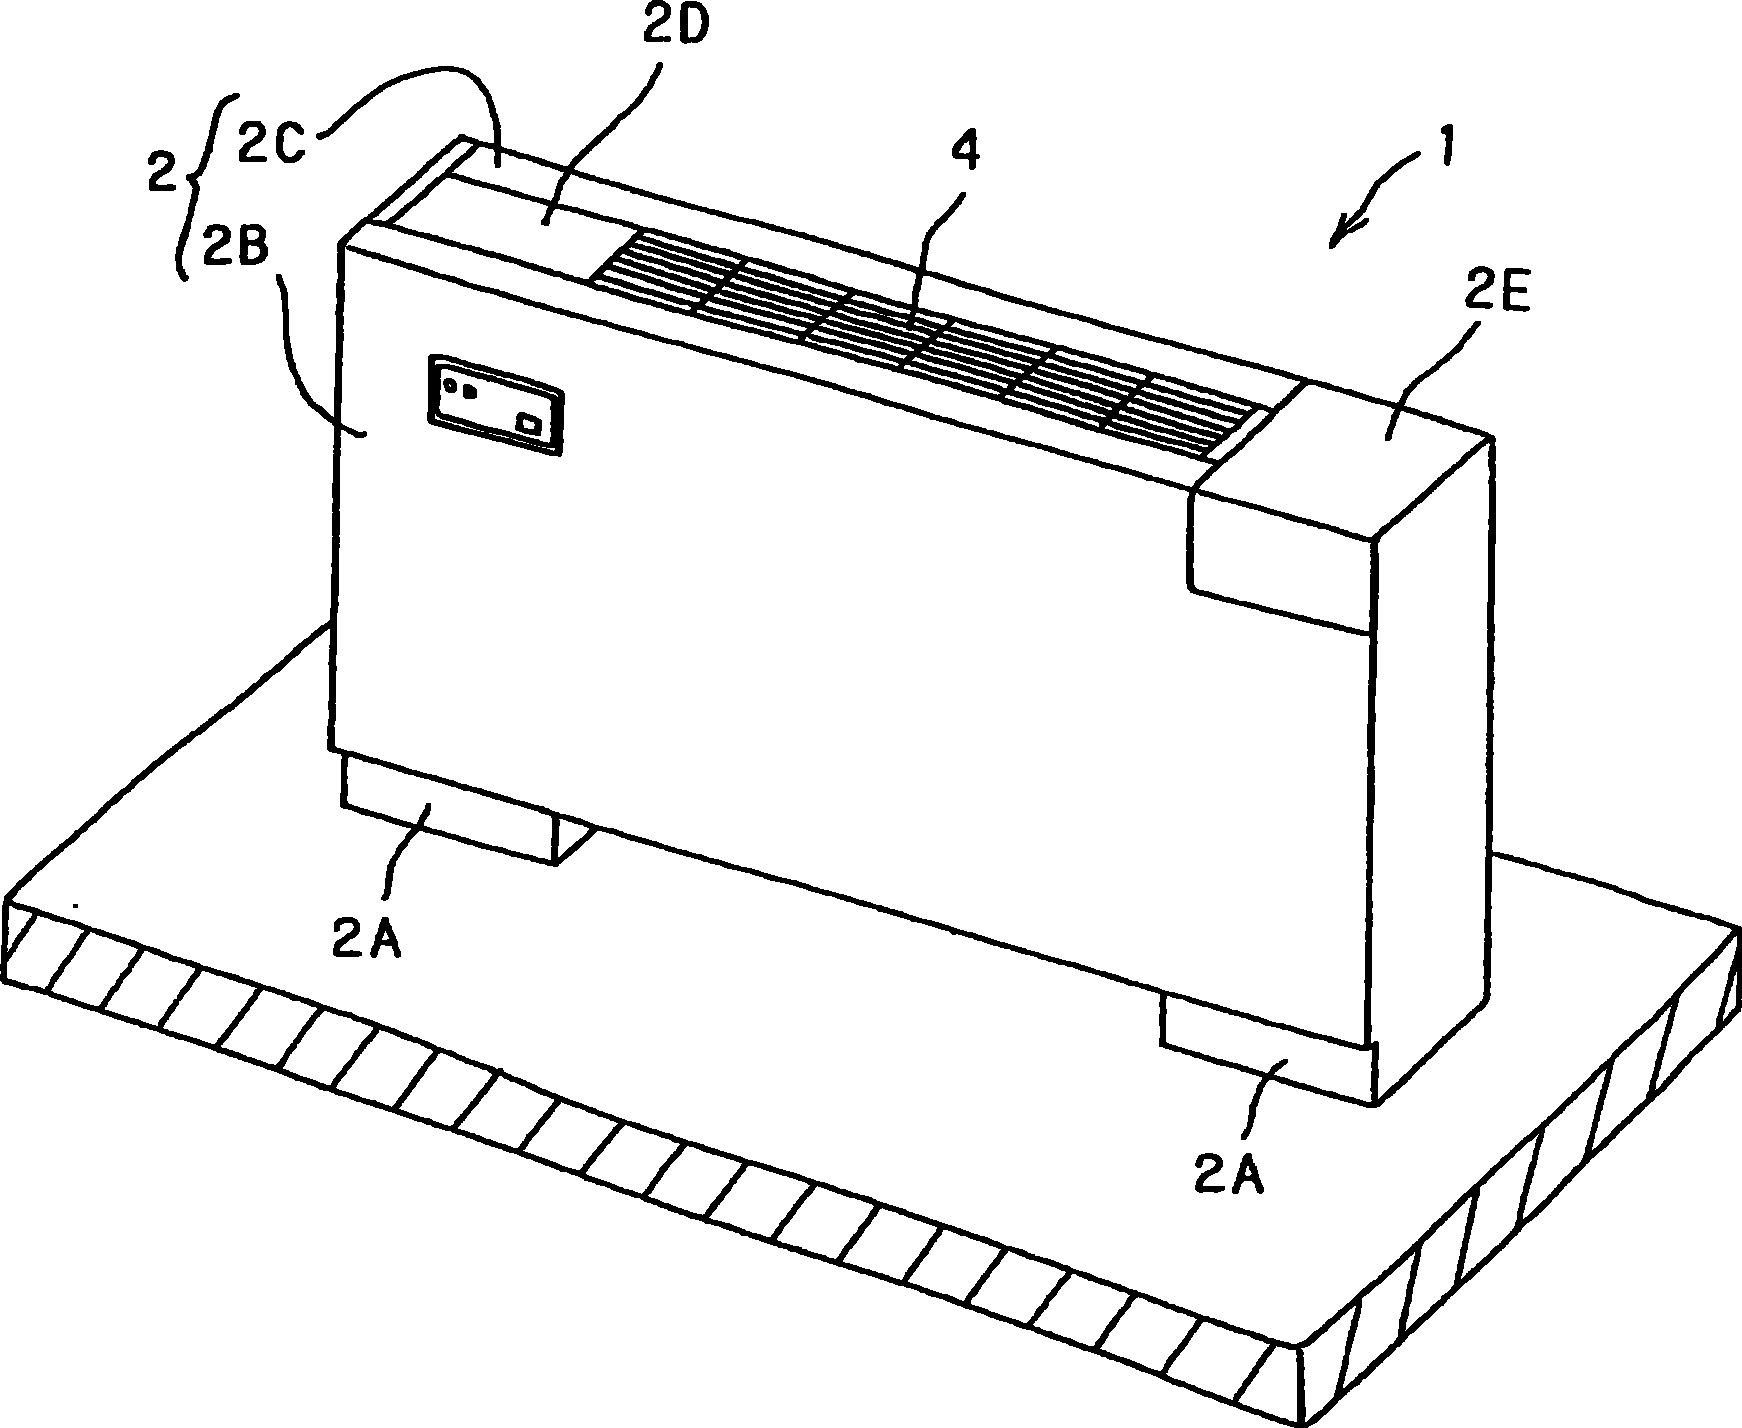 On-floor mount type air filtering apparatus